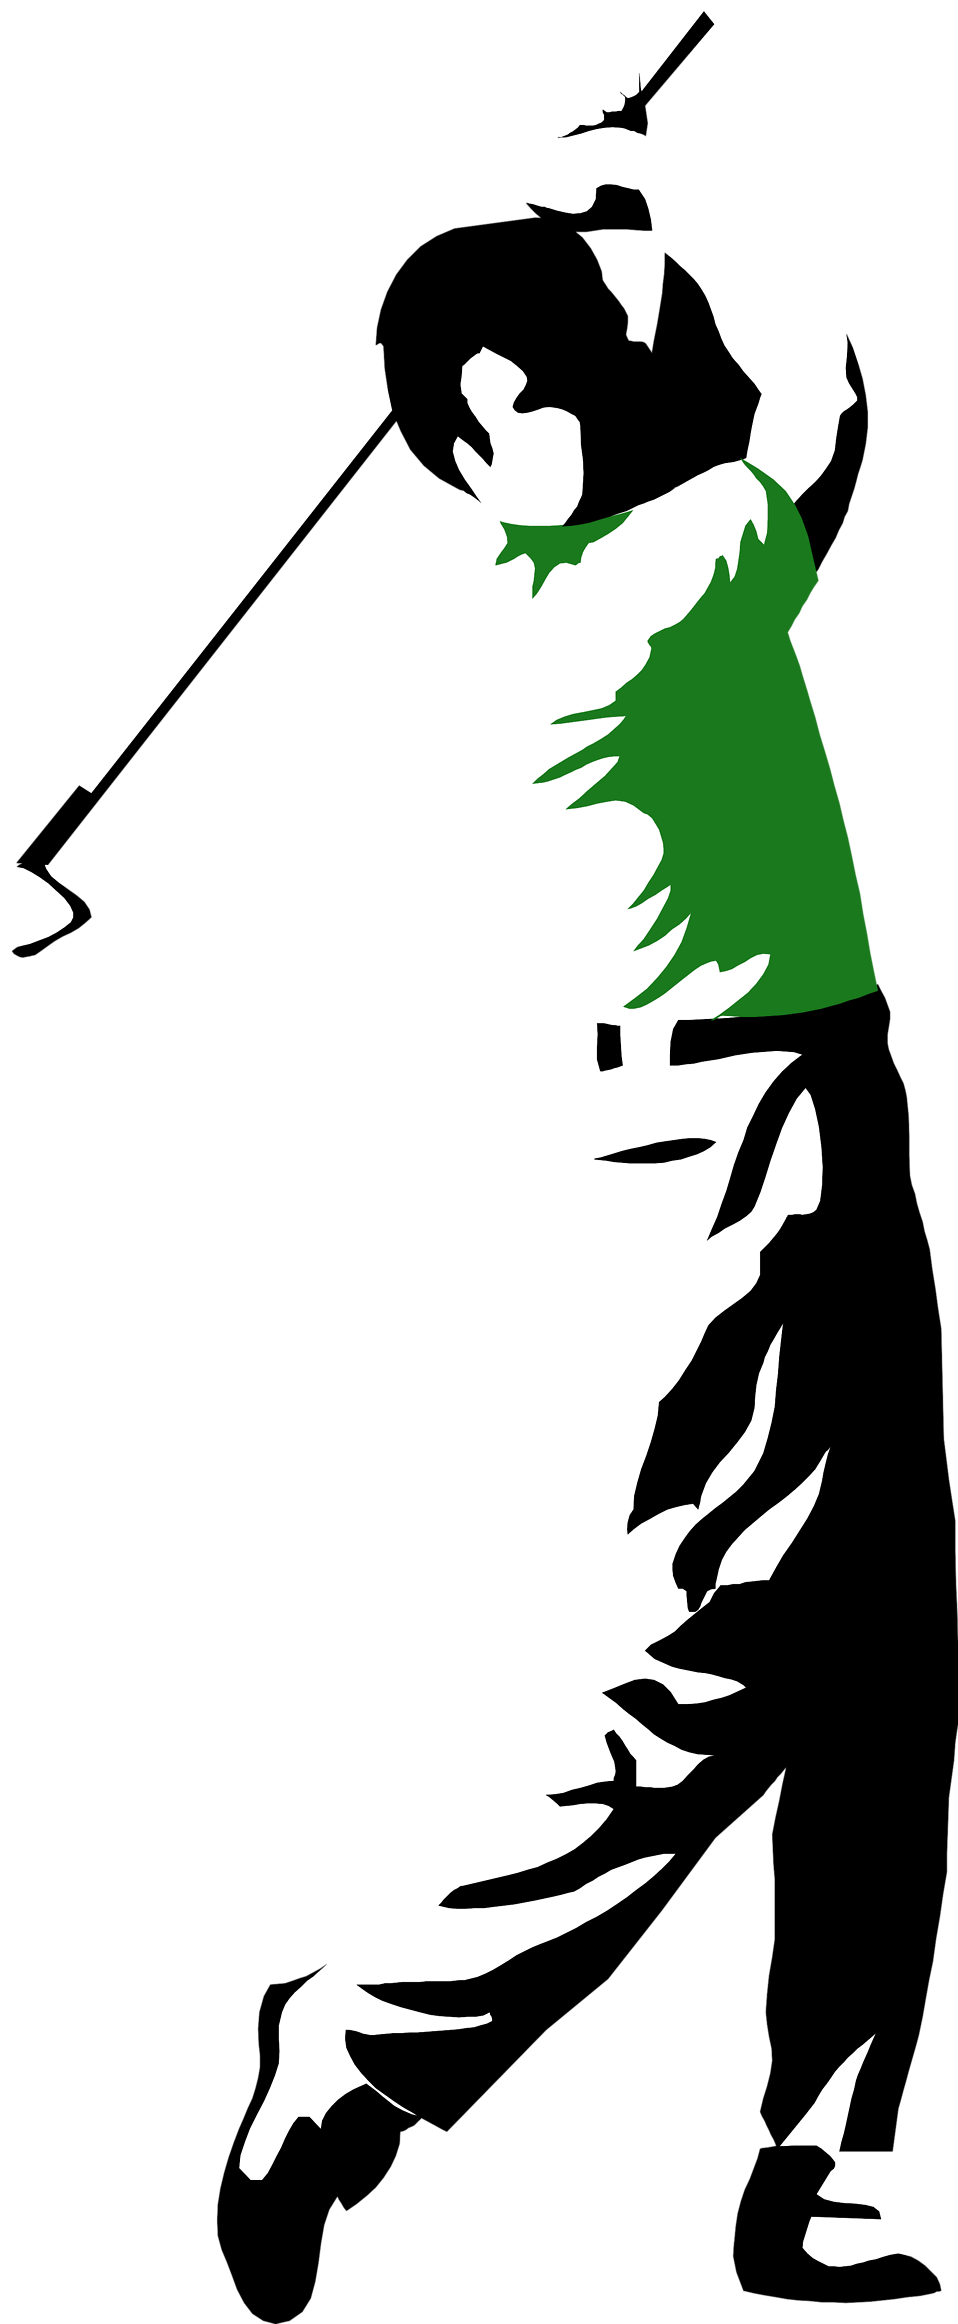 Golf   Free Stock Photo   Illustration Of A Man Swinging A Golf Club